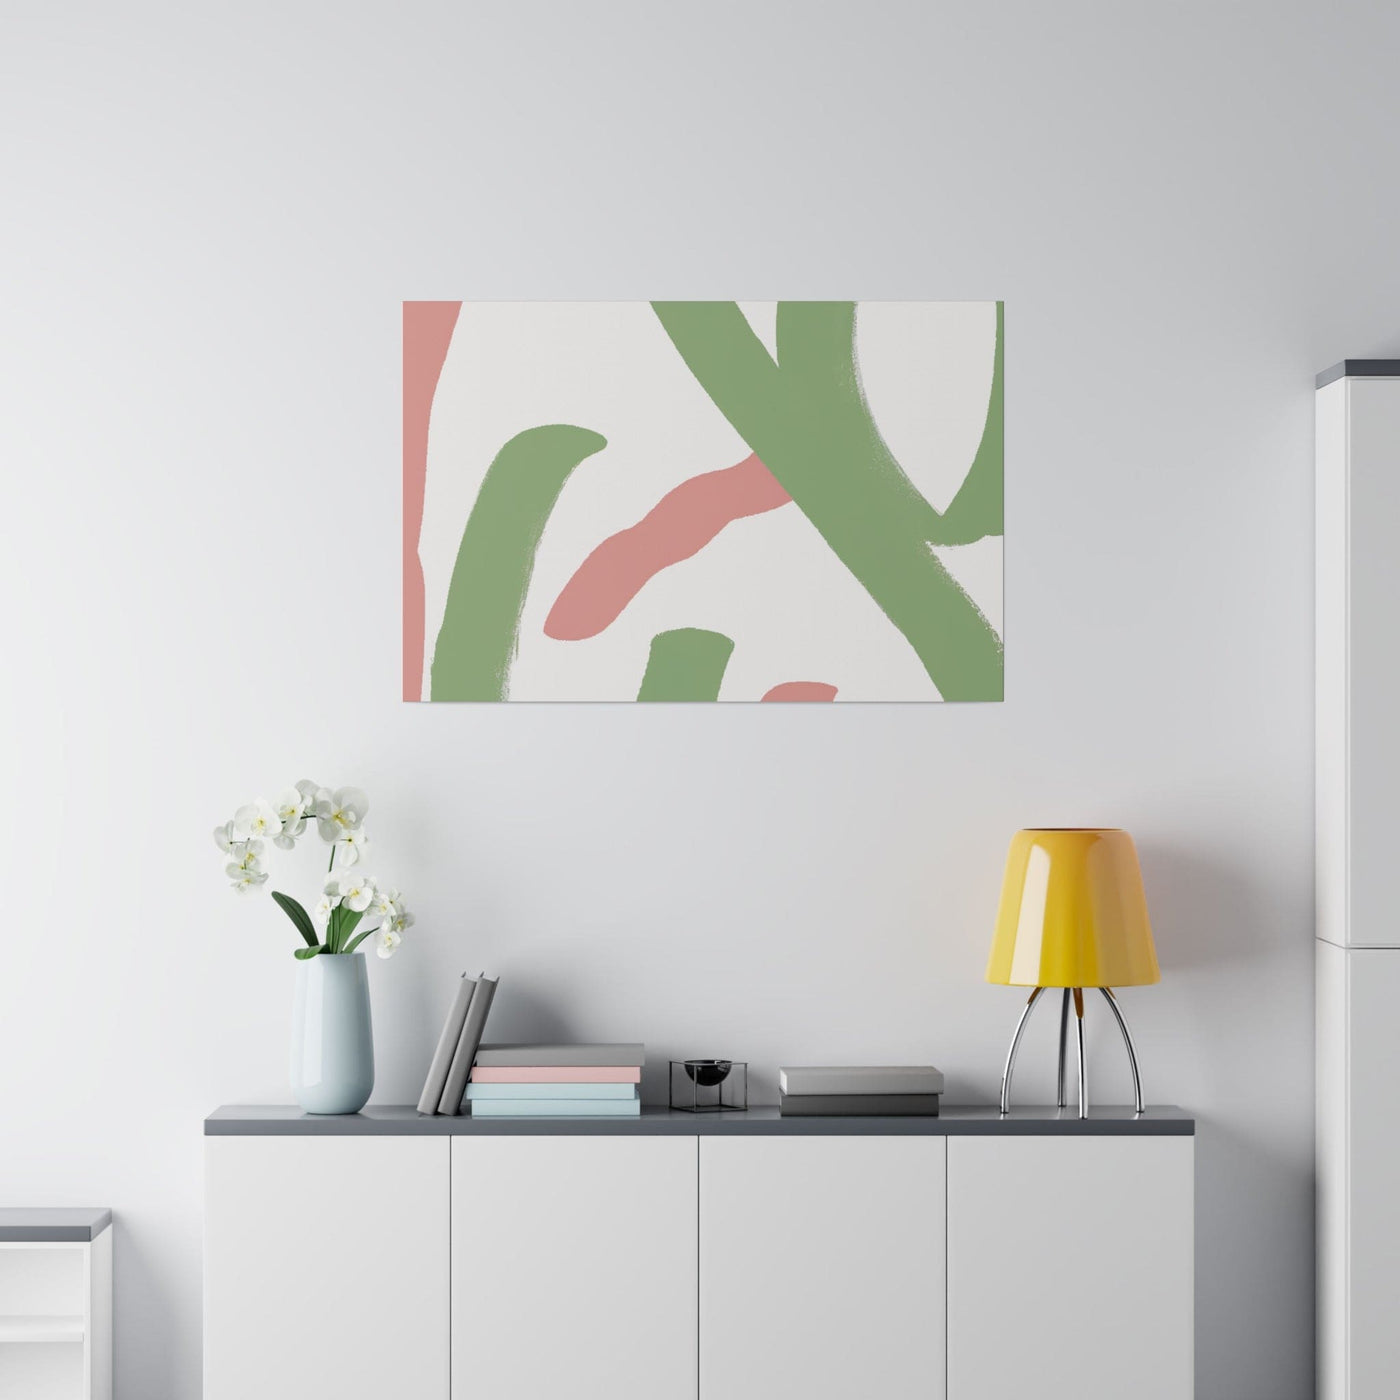 Wall Art Poster Print for Living Room Office Decor Bedroom Artwork Green Mauve